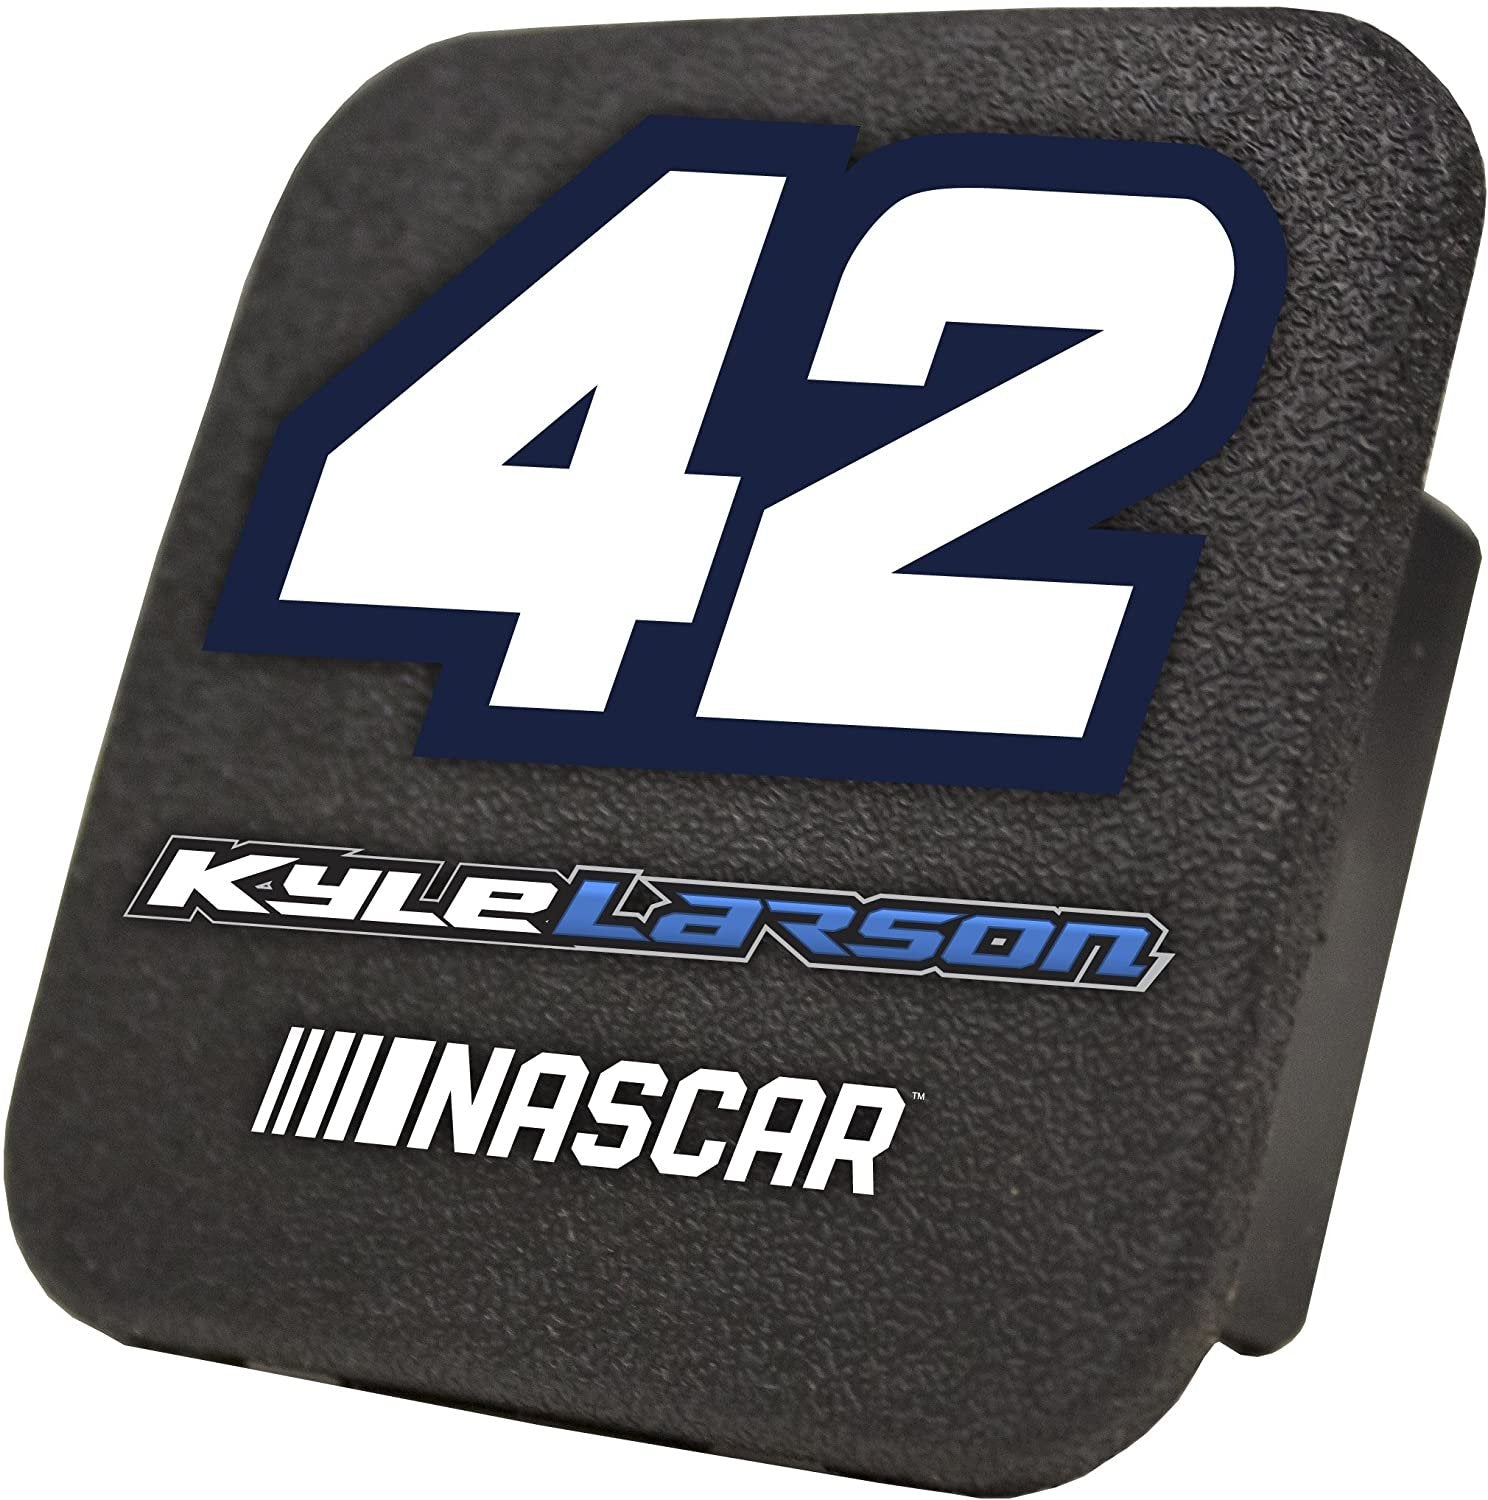 Kyle Larson #42 Rigid Rubber Plastic Hitch Cover Plug Bumper Trailer Auto Nascar Racing